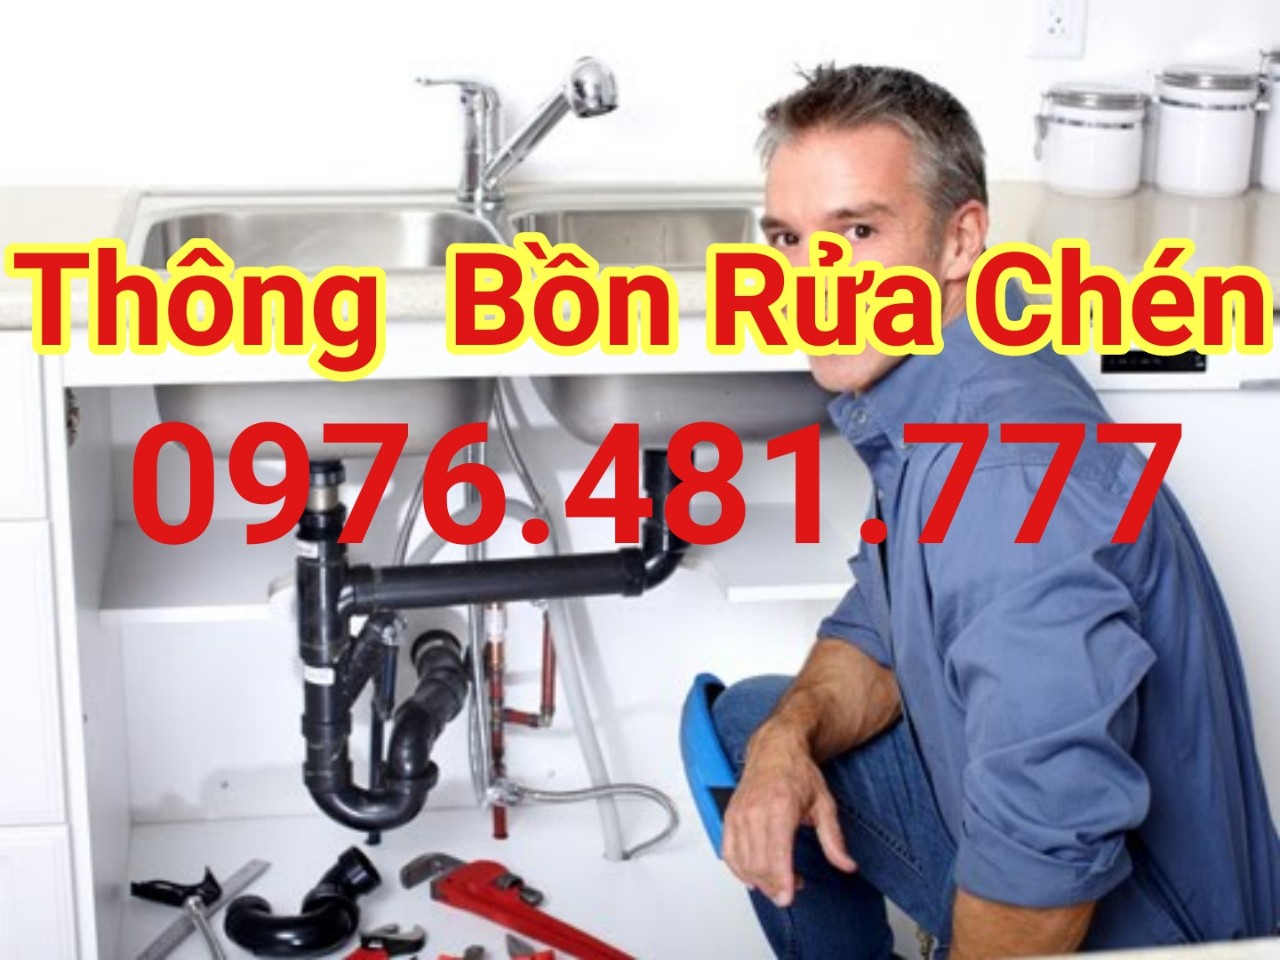 thong-bon-rua-chen-binh-dinh